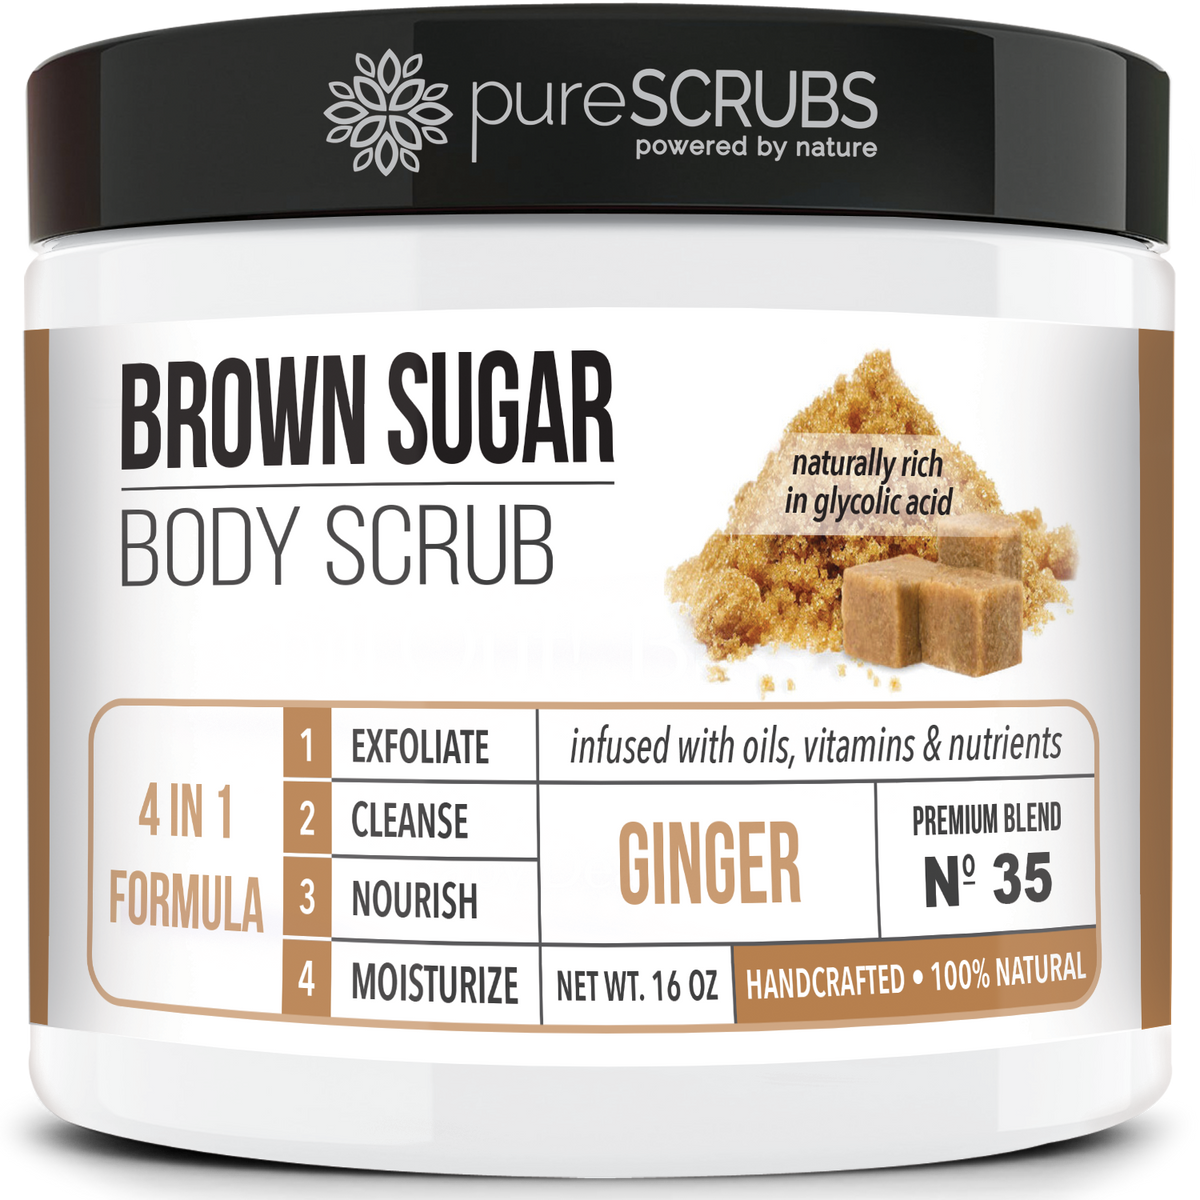 Ginger Body Scrub / Brown Sugar / Premium Blend #35